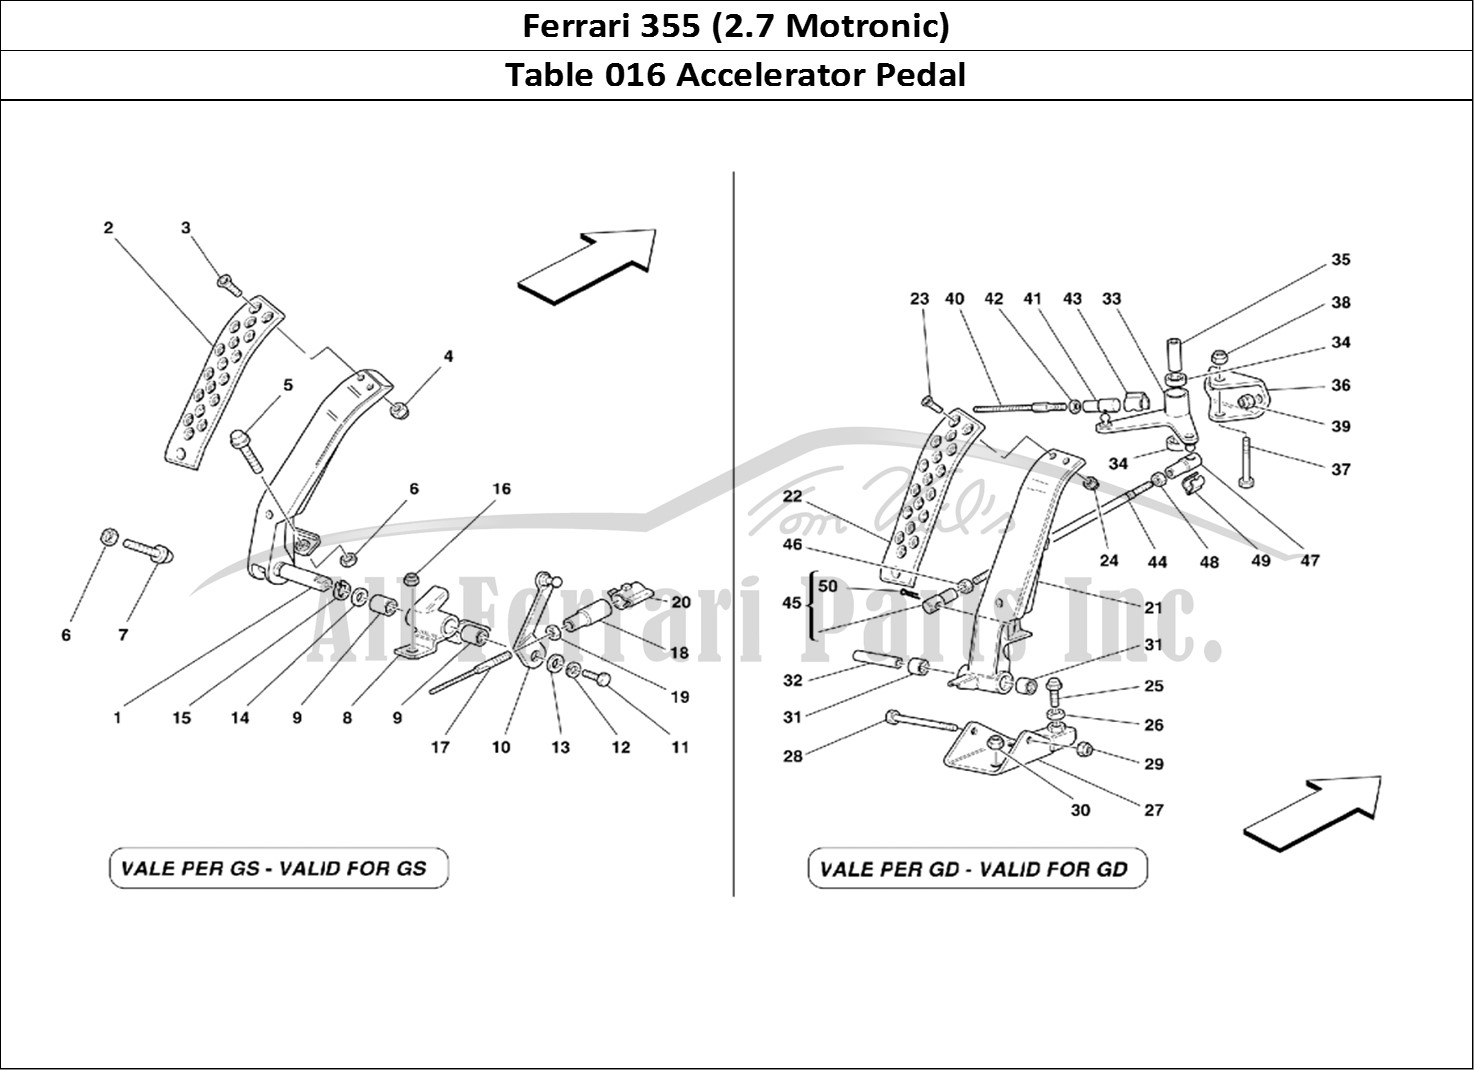 Ferrari Parts Ferrari 355 (2.7 Motronic) Page 016 Accelerator Pedal